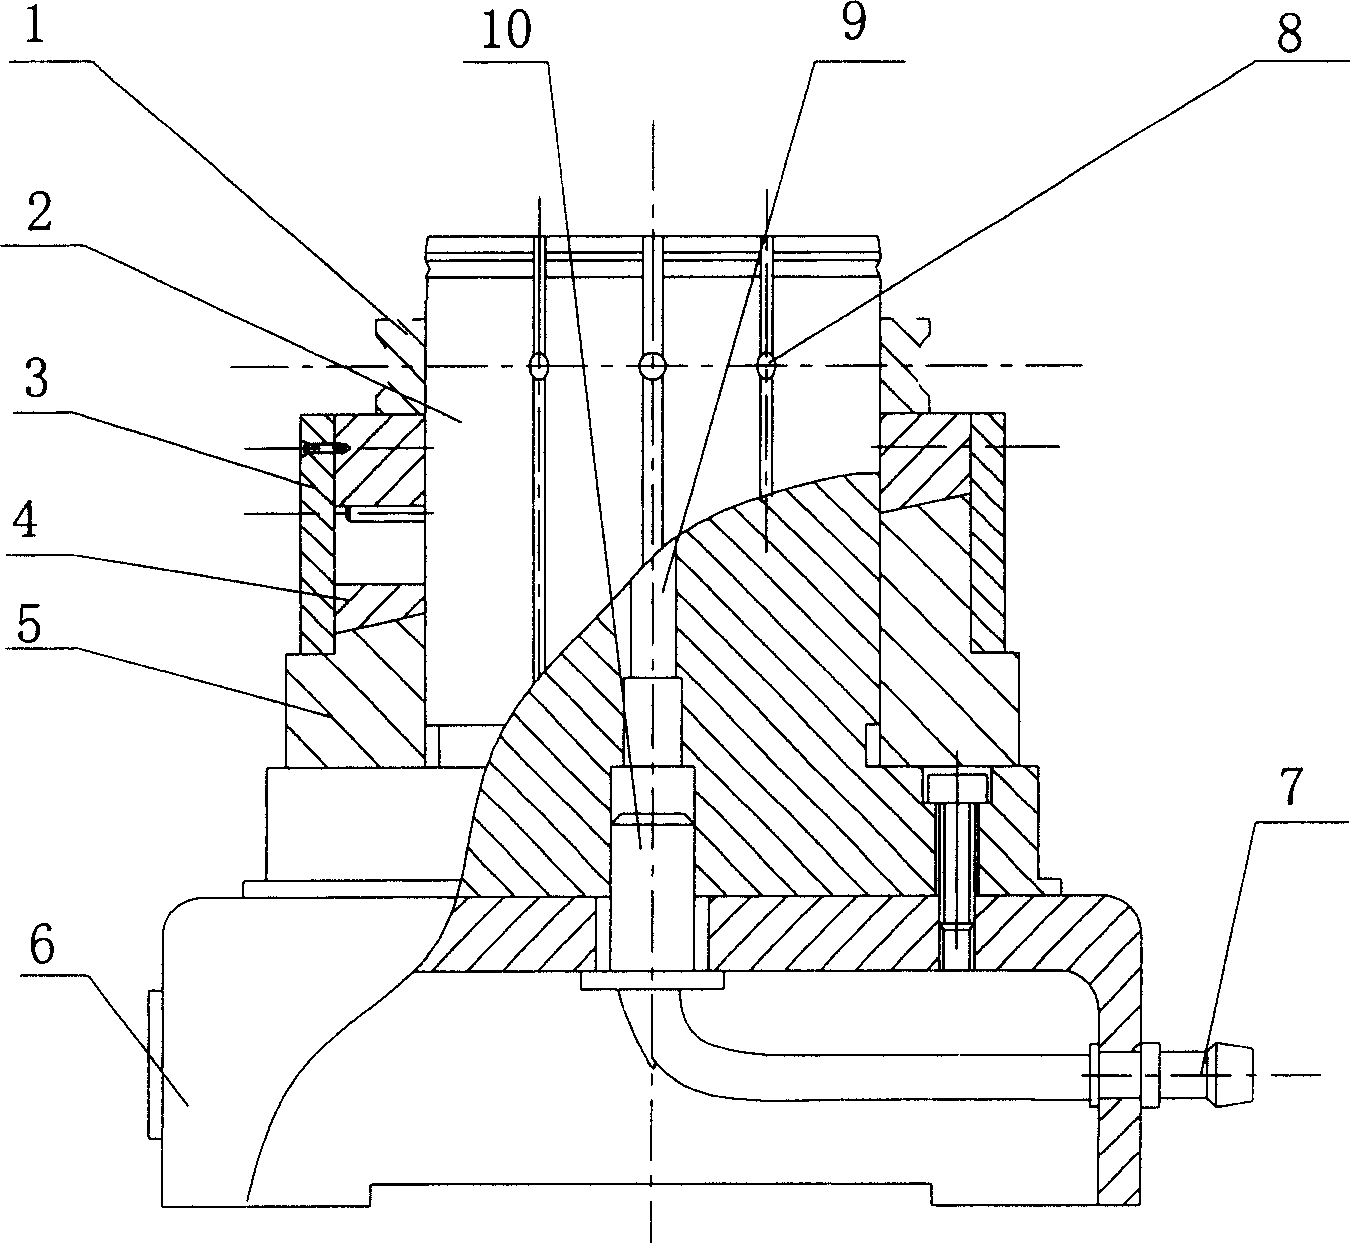 Pneumatic instrument for measuring inside diameter of thin-wall bearing